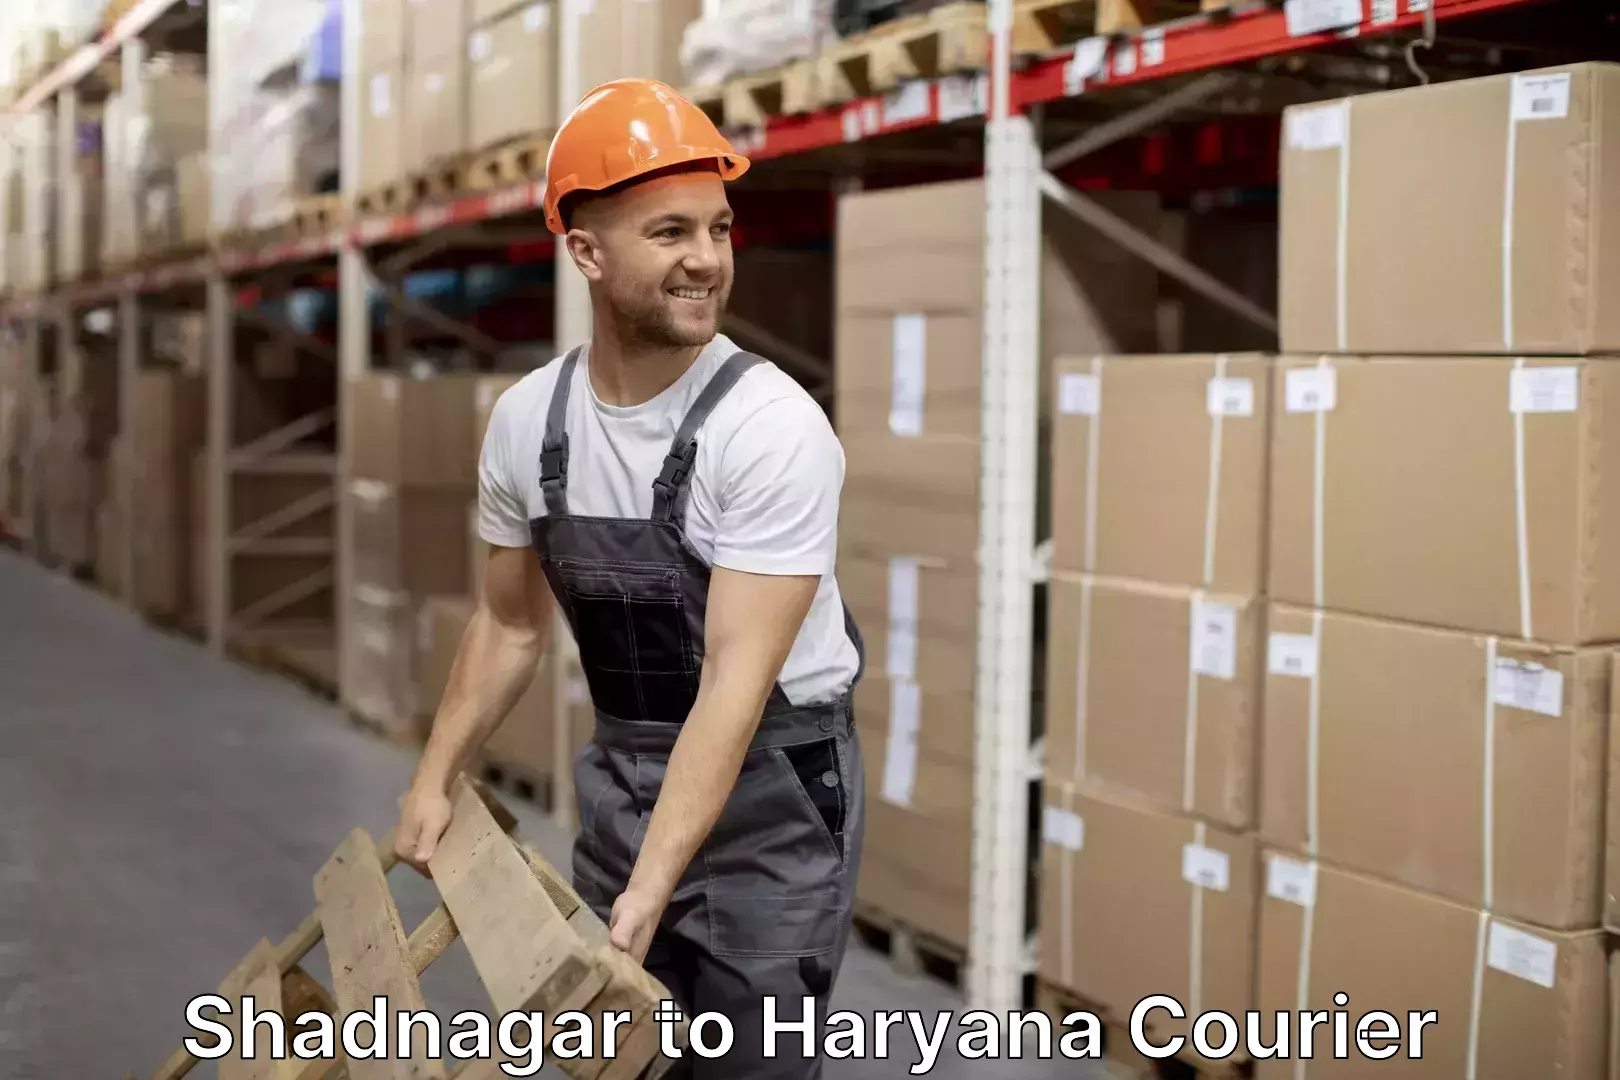 Professional moving company Shadnagar to Haryana